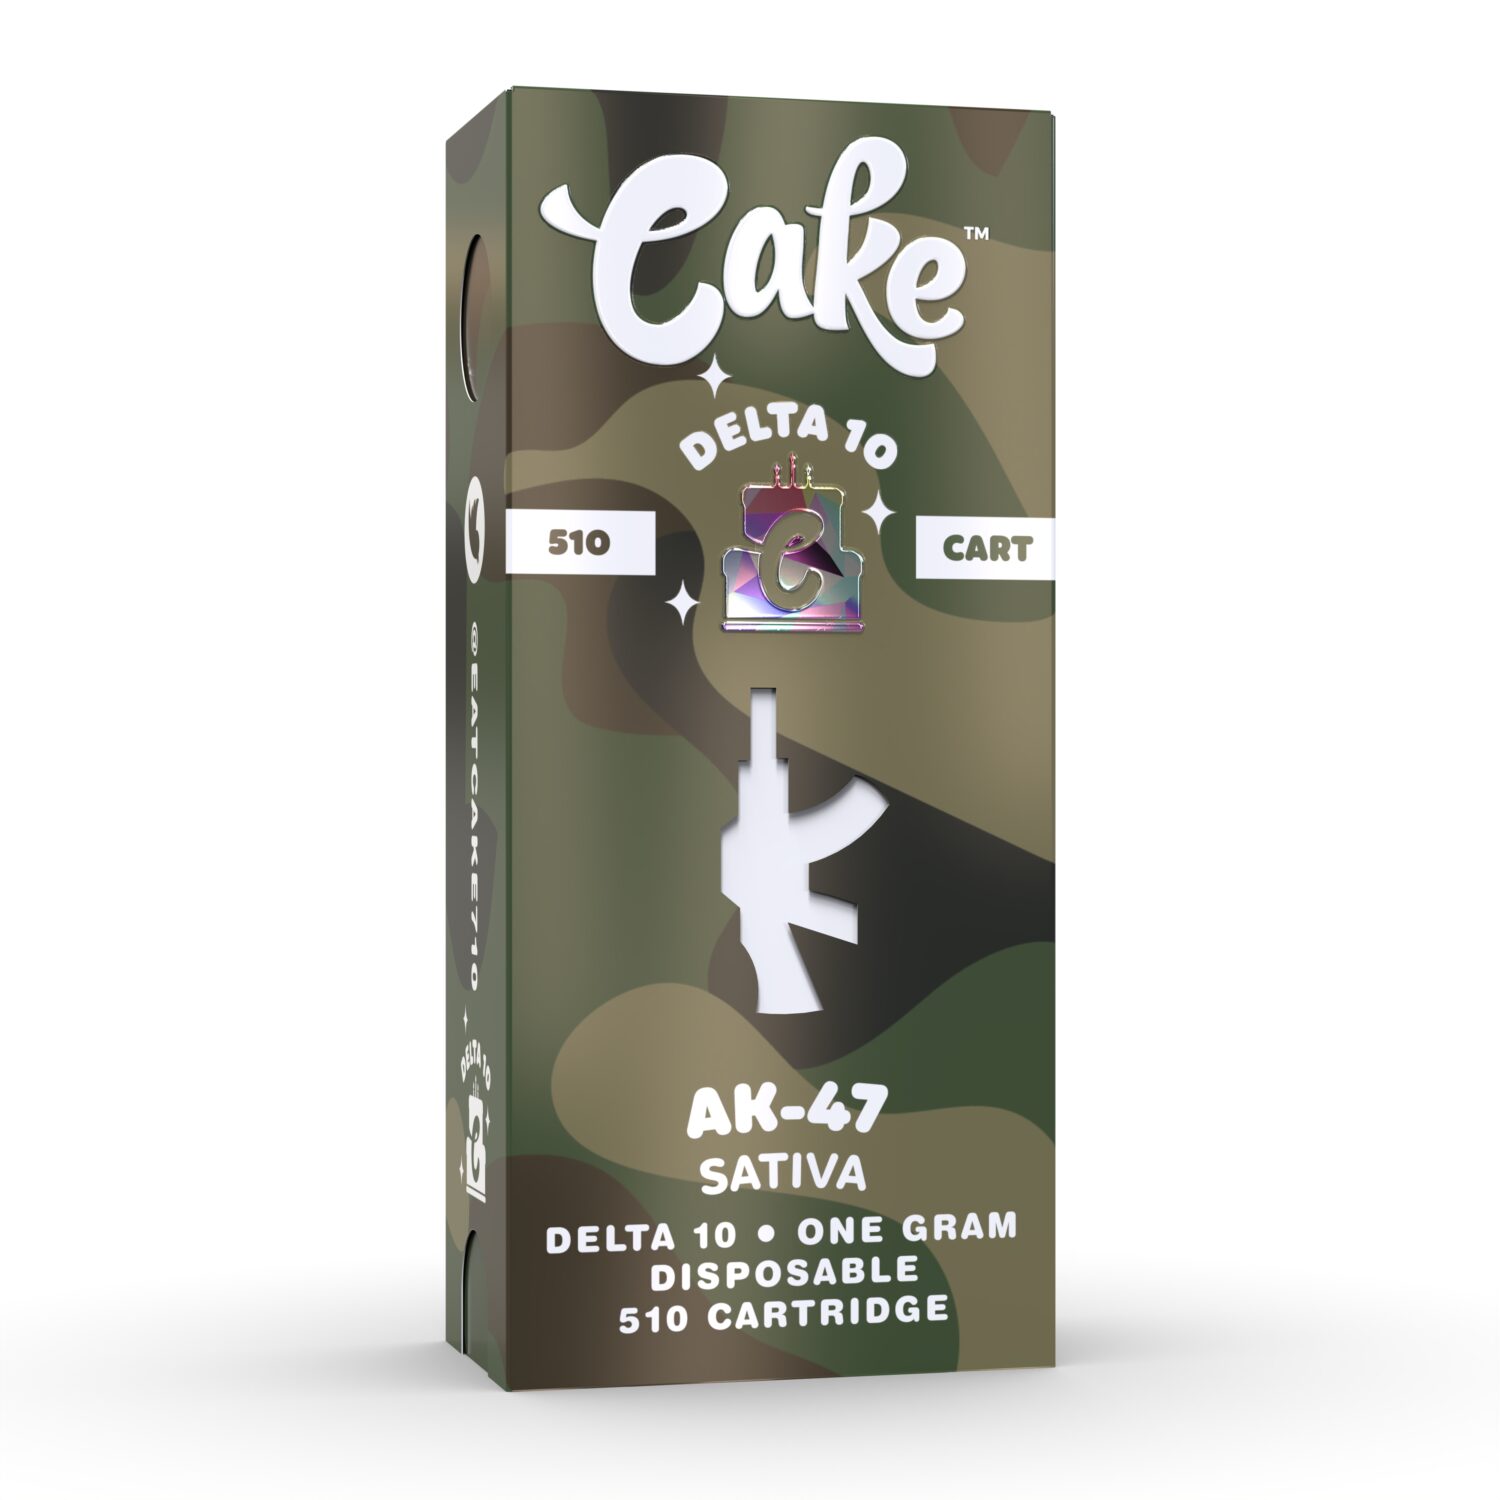 Cake-Delta-10-Cartridge-Ak-47-1-scaled-1.jpg